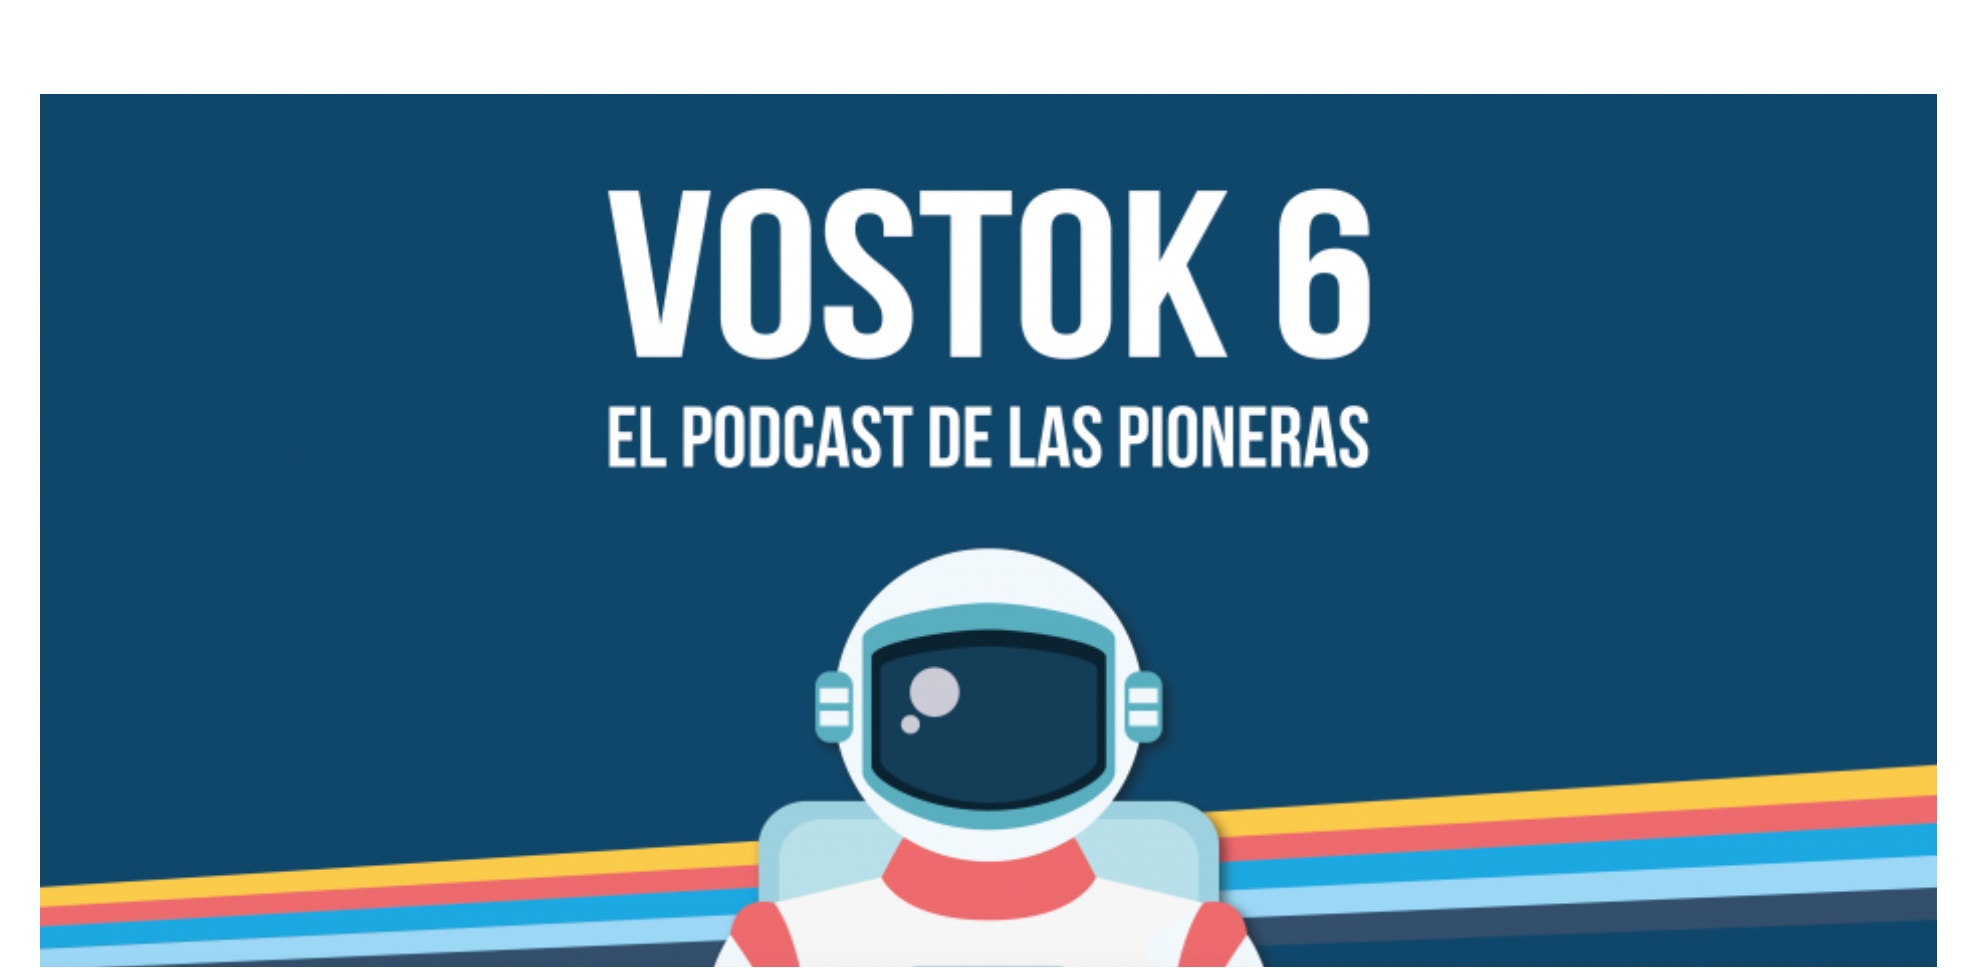 VOSTOK 6 , podcast , pioneras, arena, programapublicidad